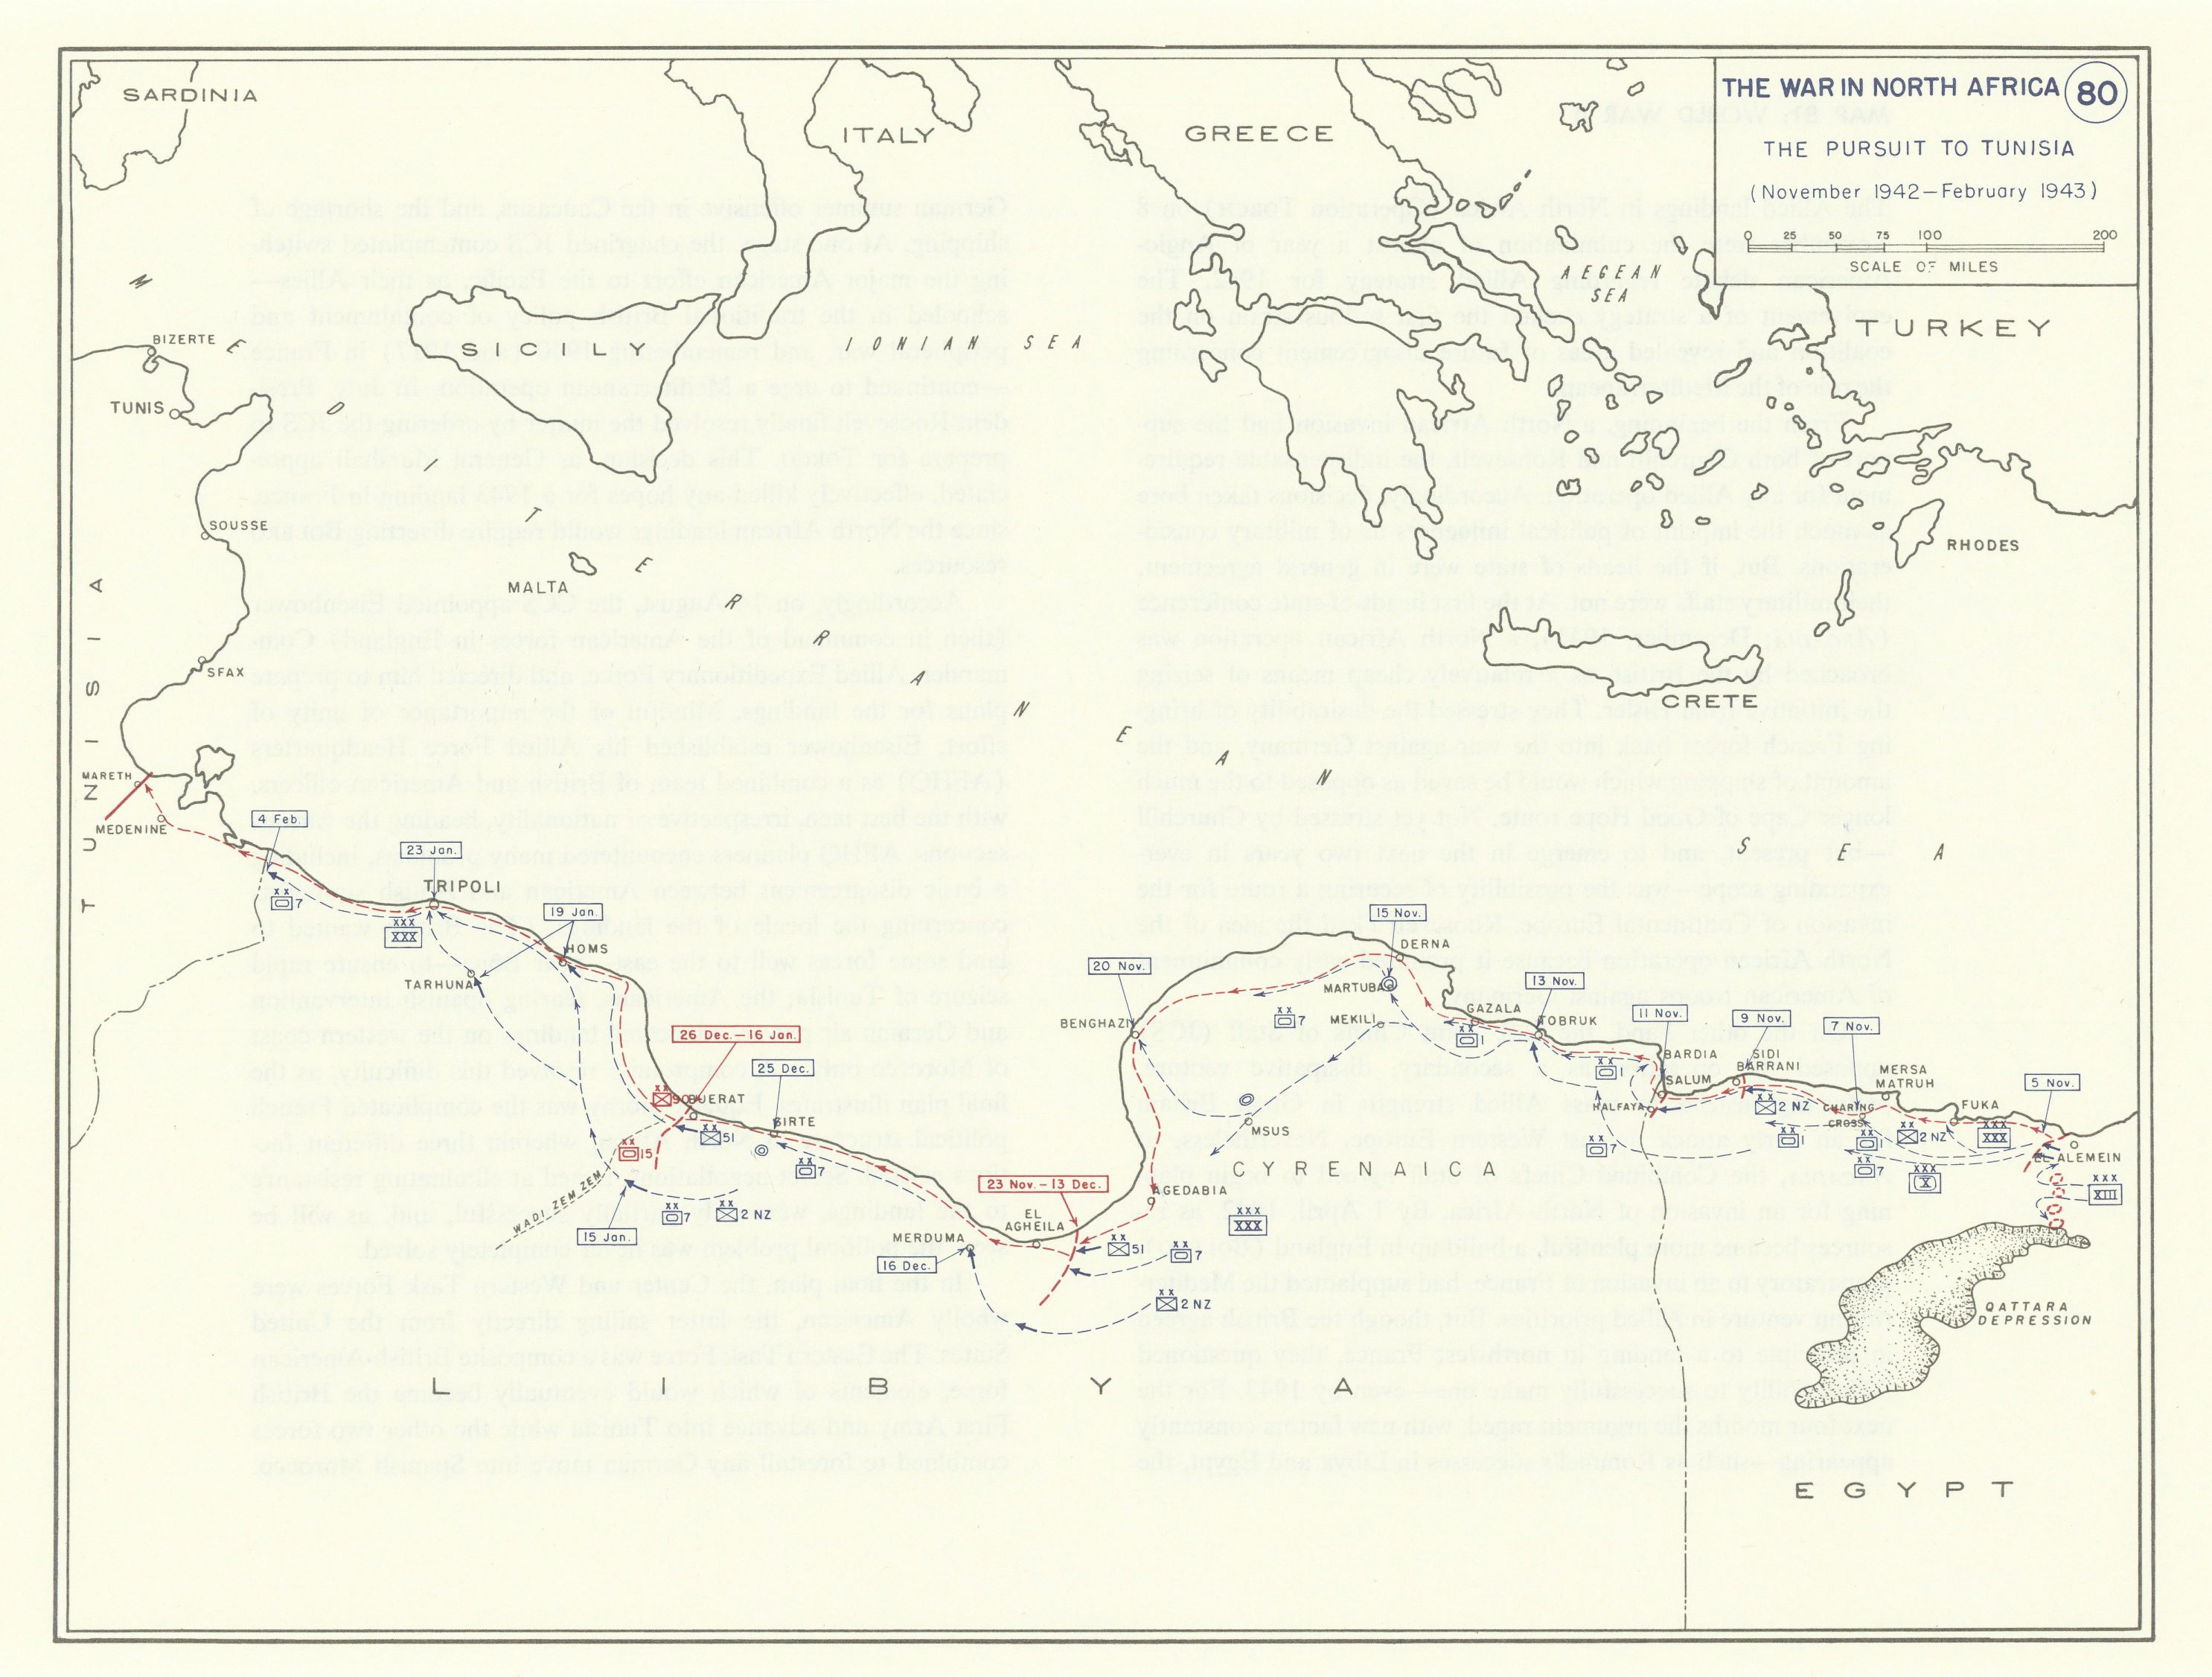 World War 2. North Africa. Nov 1942-Feb 1943 Pursuit to Tunisia 1959 old map